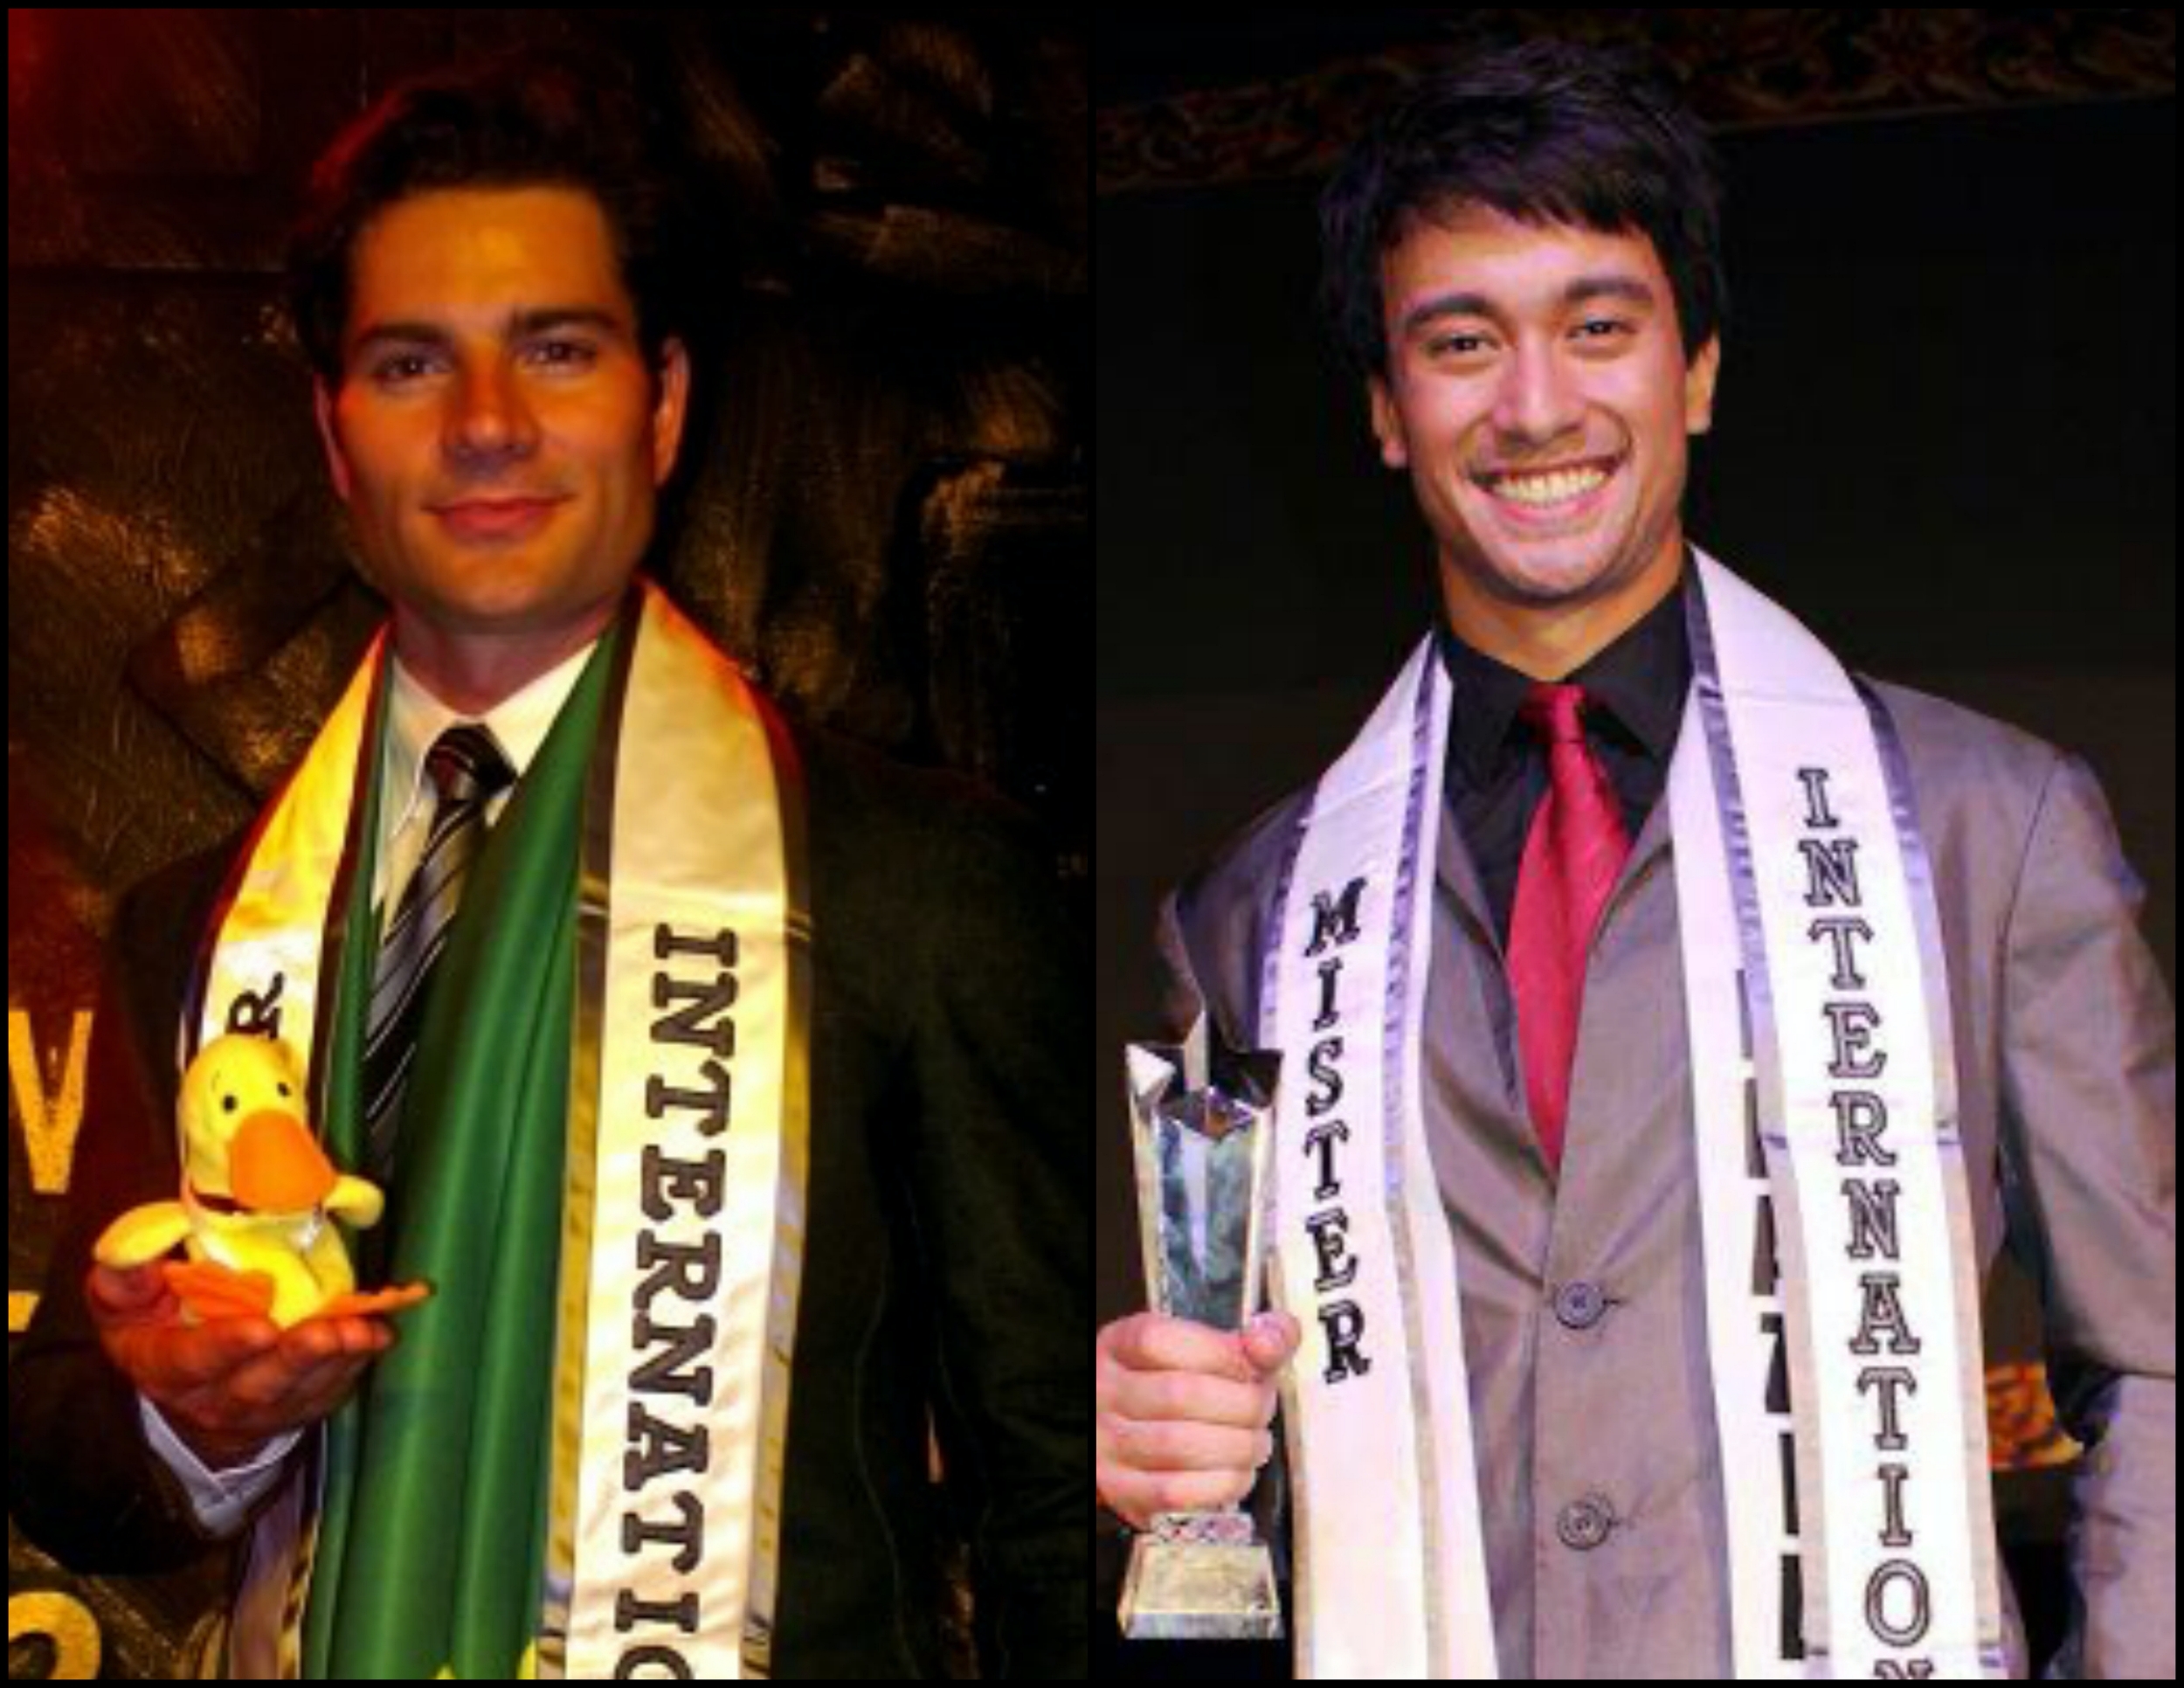 Mister International winners from Brazil 2007 Alan Martini and 2011 Cesar Curti